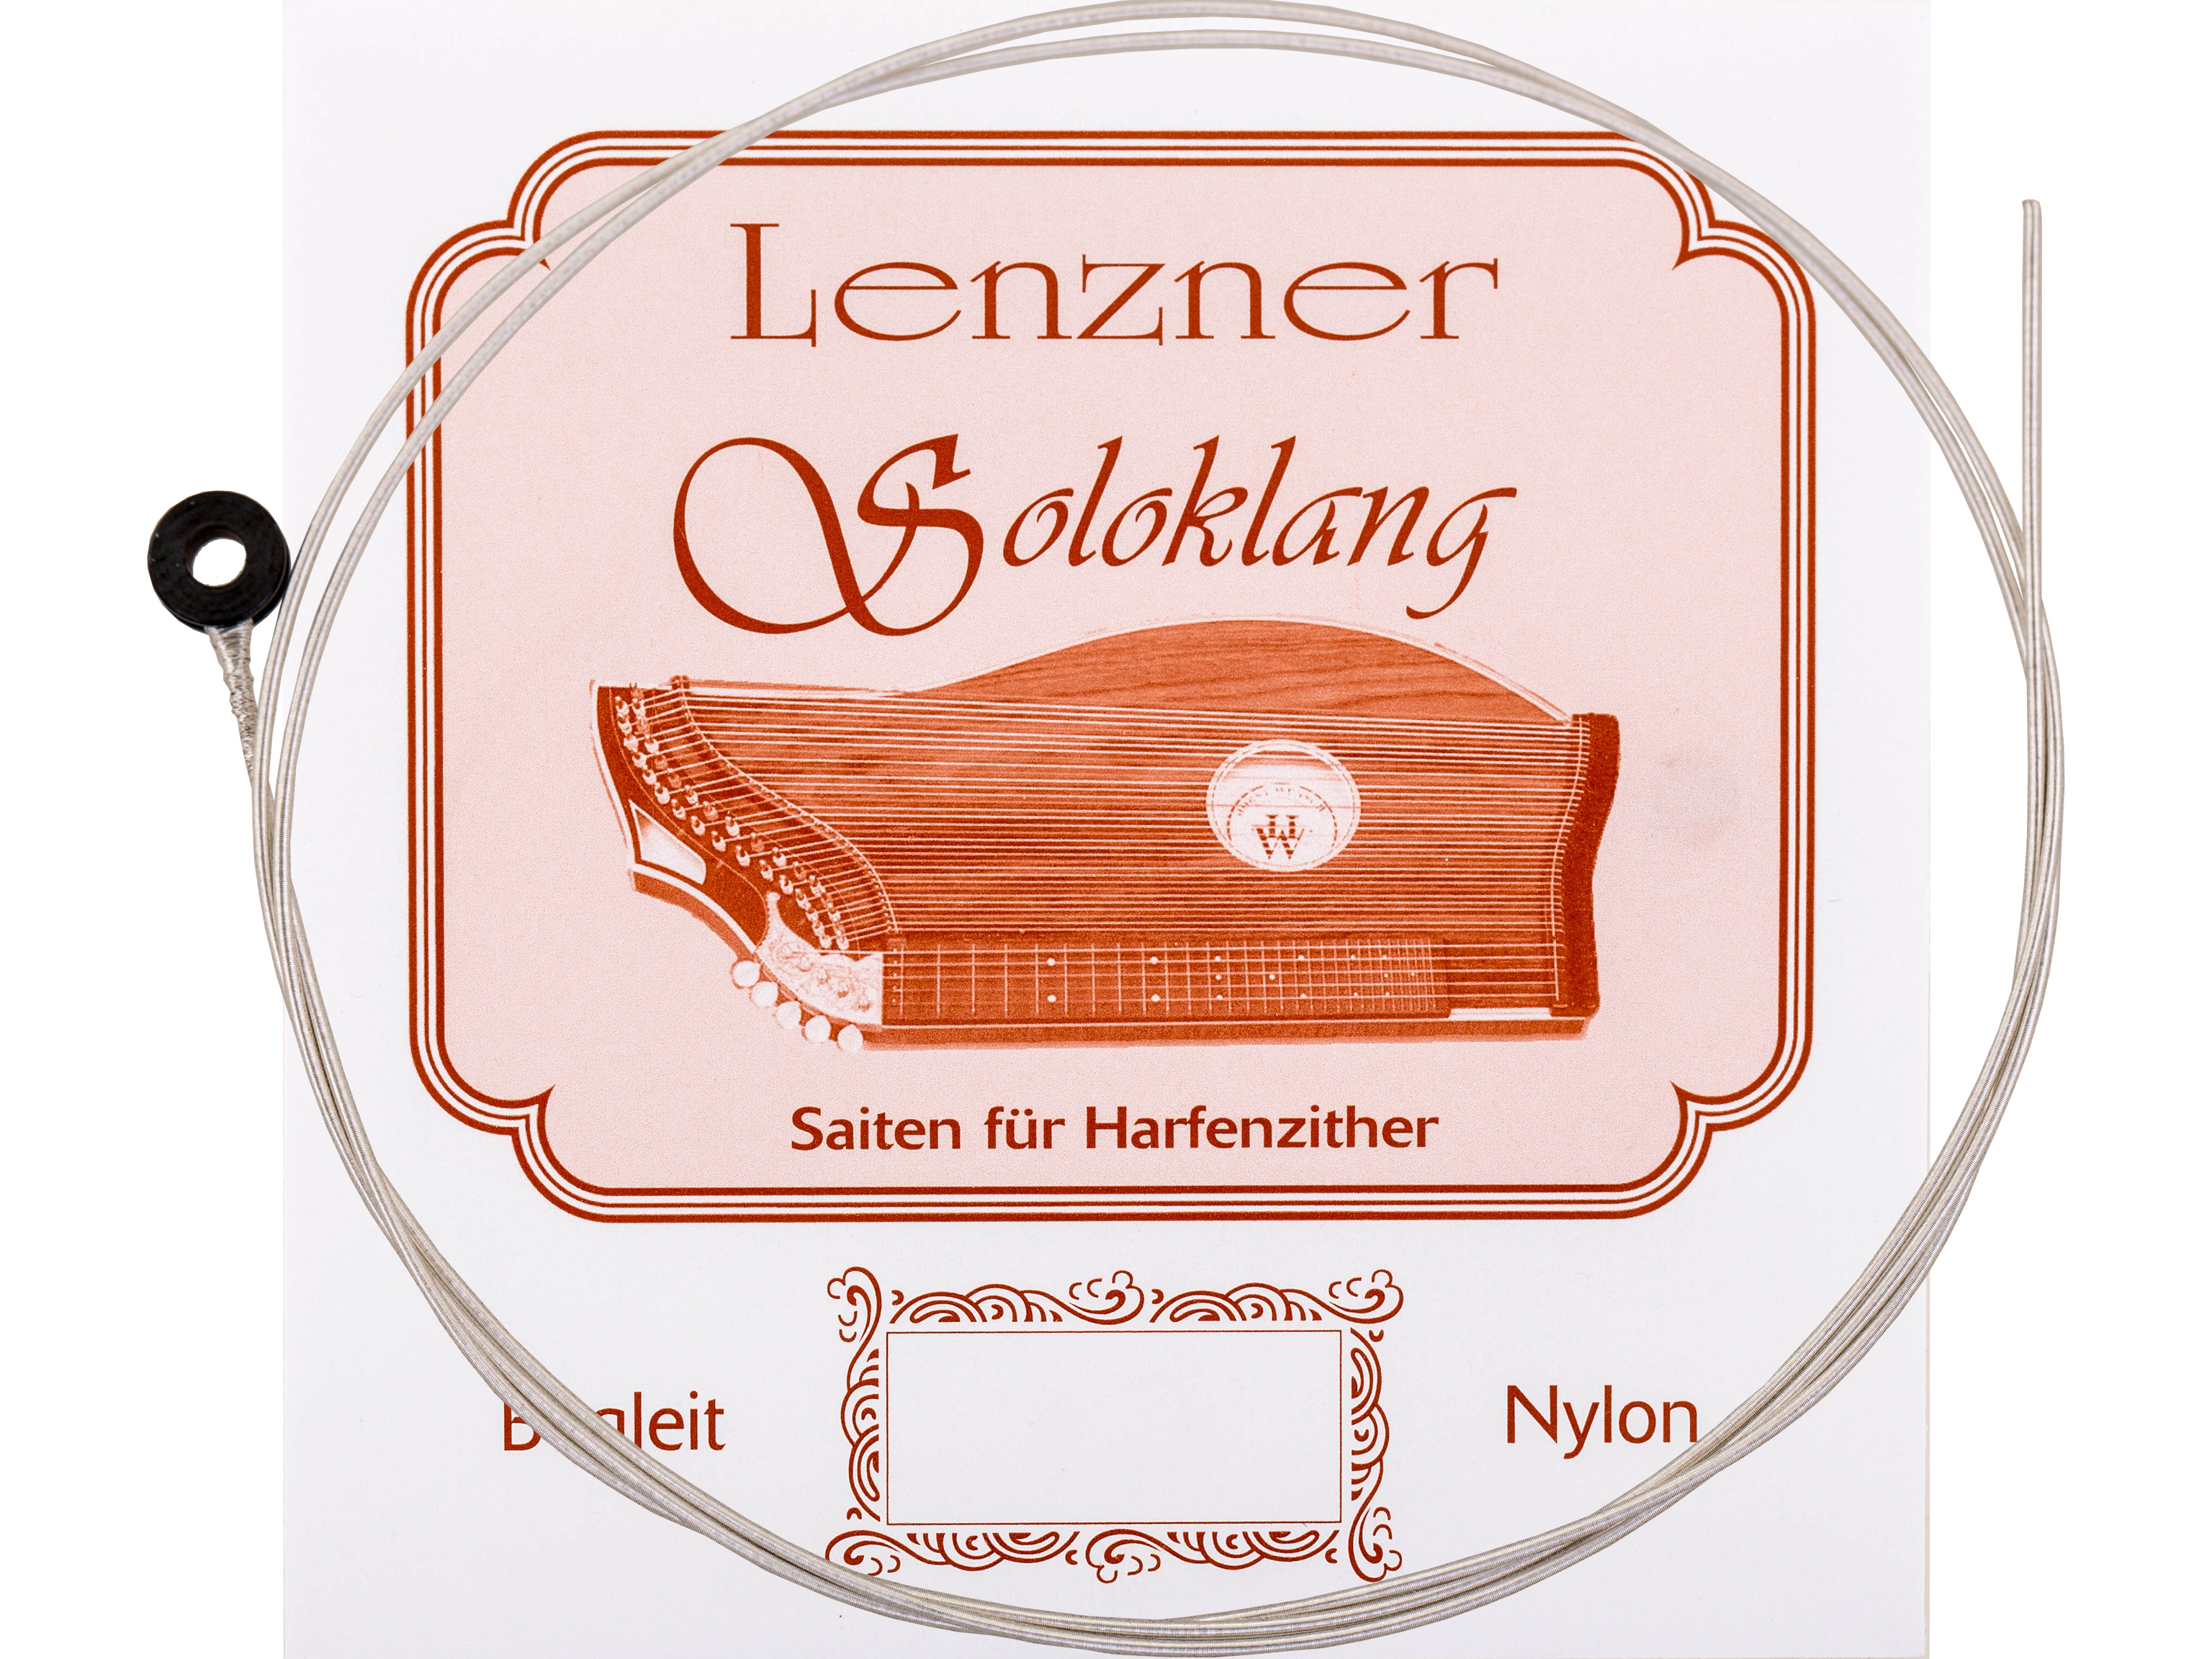 Lenzner 4. c Zithersaite Soloklang Begleit